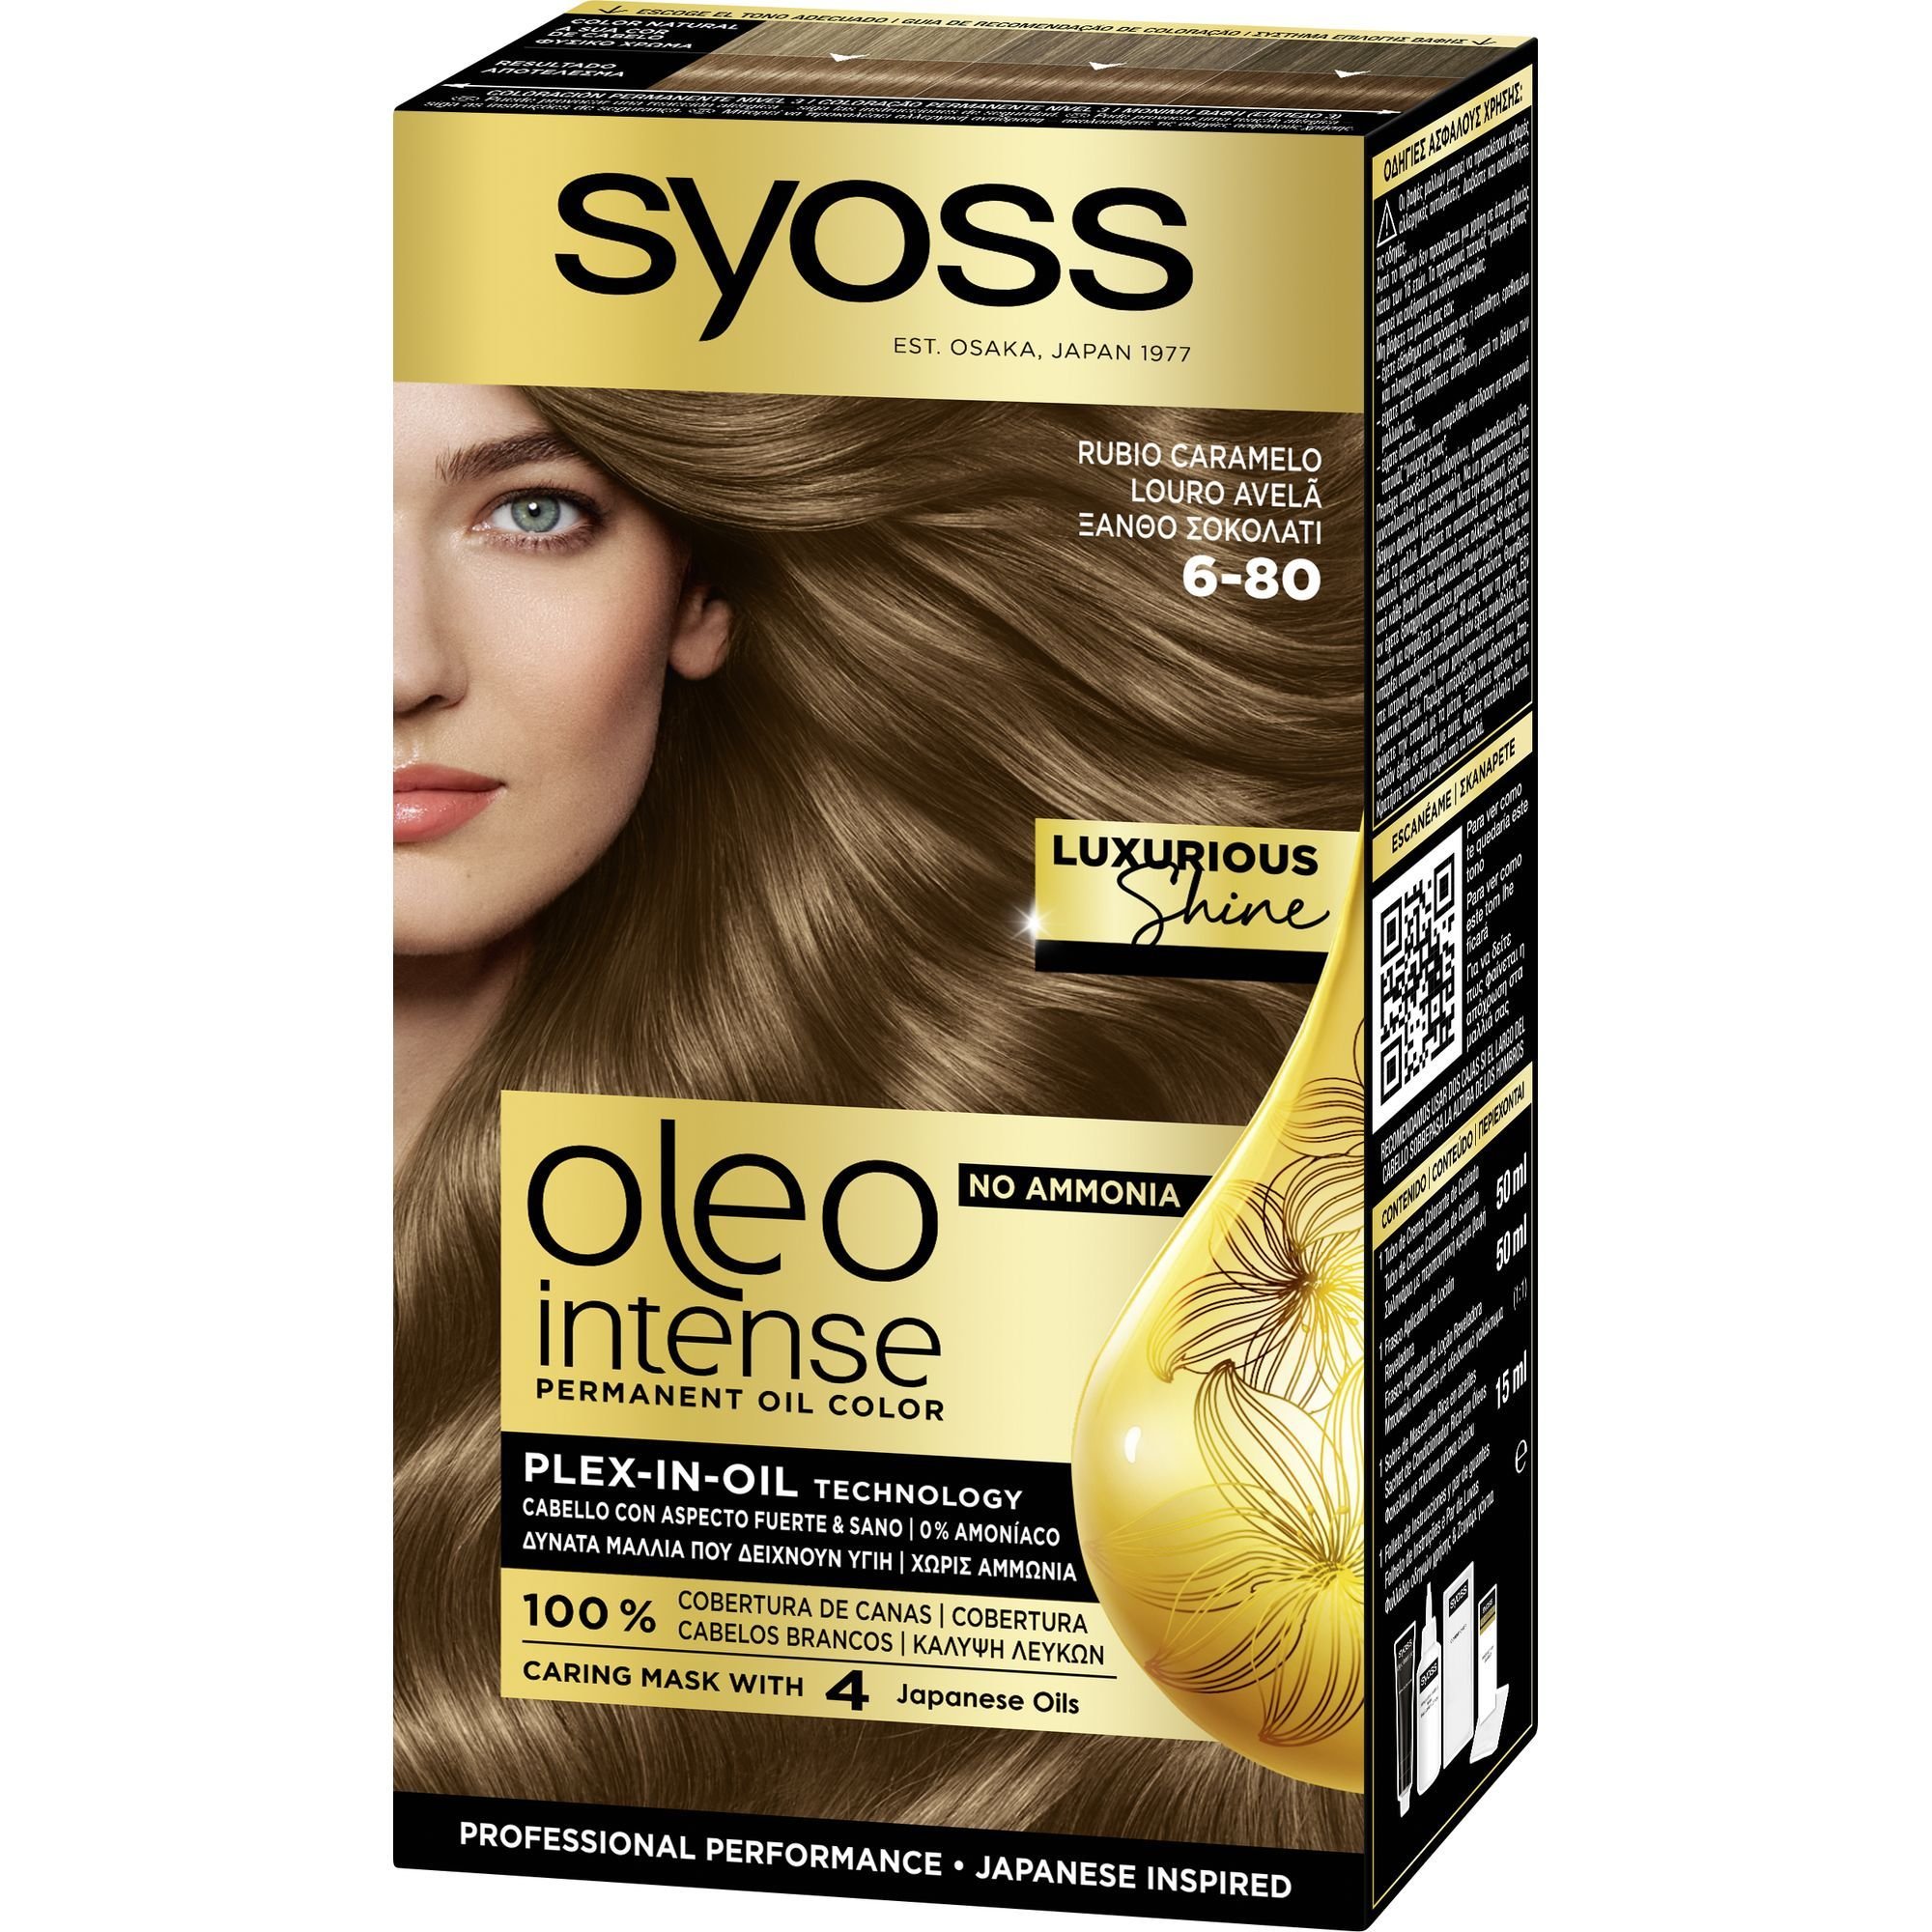 Syoss Oleo Intense Permanent Oil Hair Color Kit Επαγγελματική Μόνιμη Βαφή Μαλλιών για Εξαιρετική Κάλυψη & Έντονο Χρώμα που Διαρκεί, Χωρίς Αμμωνία 1 Τεμάχιο – 6-80 Ξανθό Σοκολατί